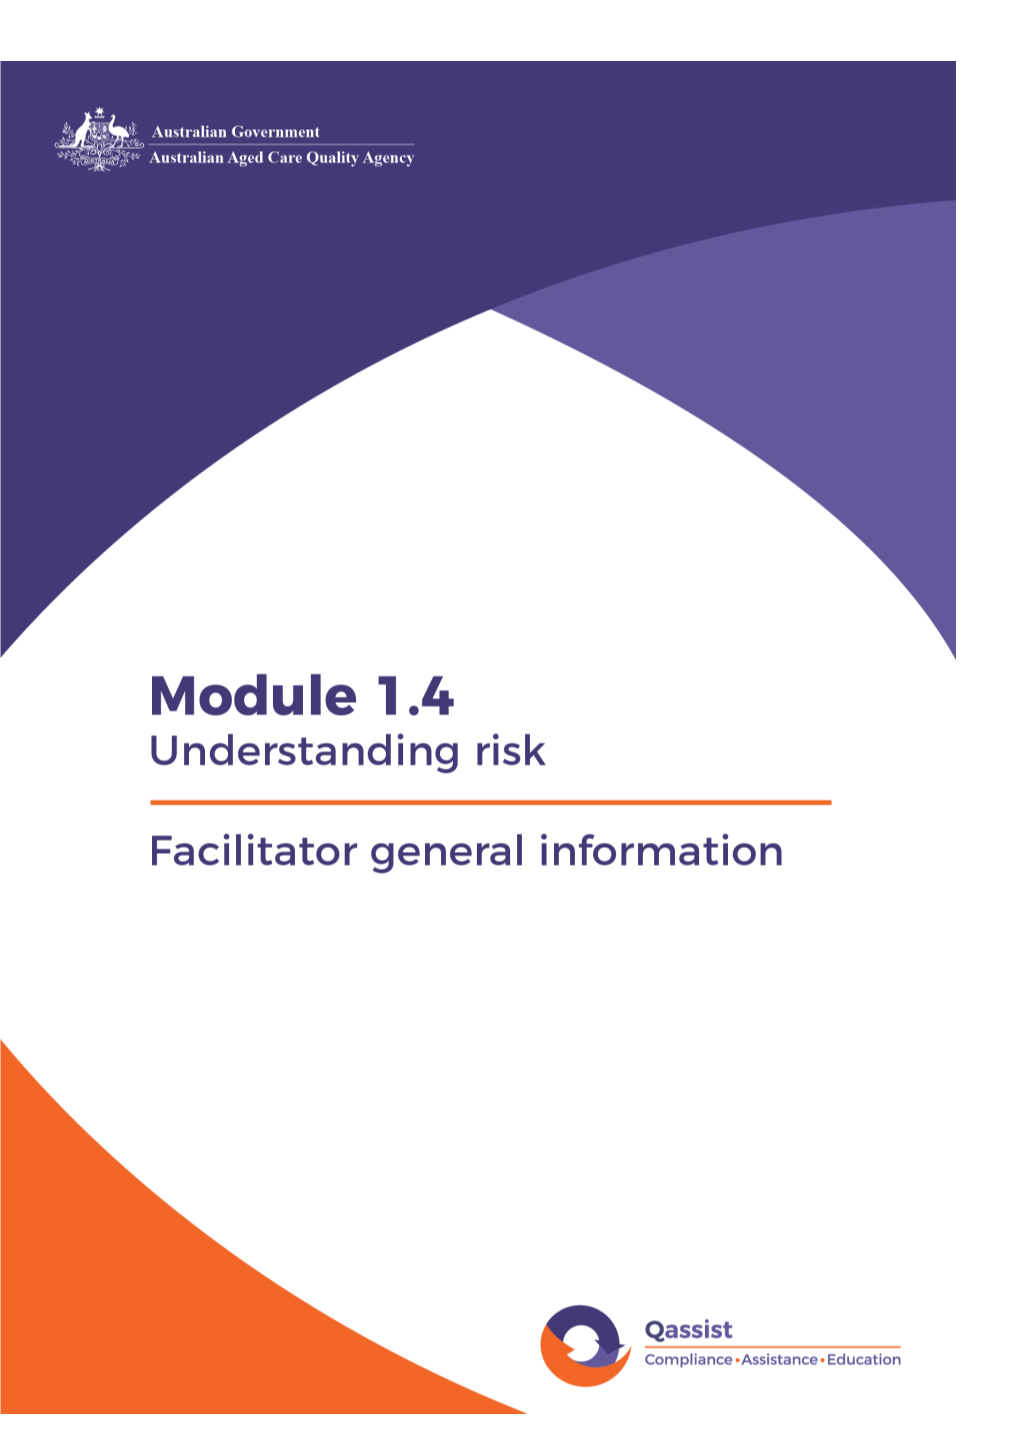 Module 1.4 Understanding Risk - Facilitator General Information